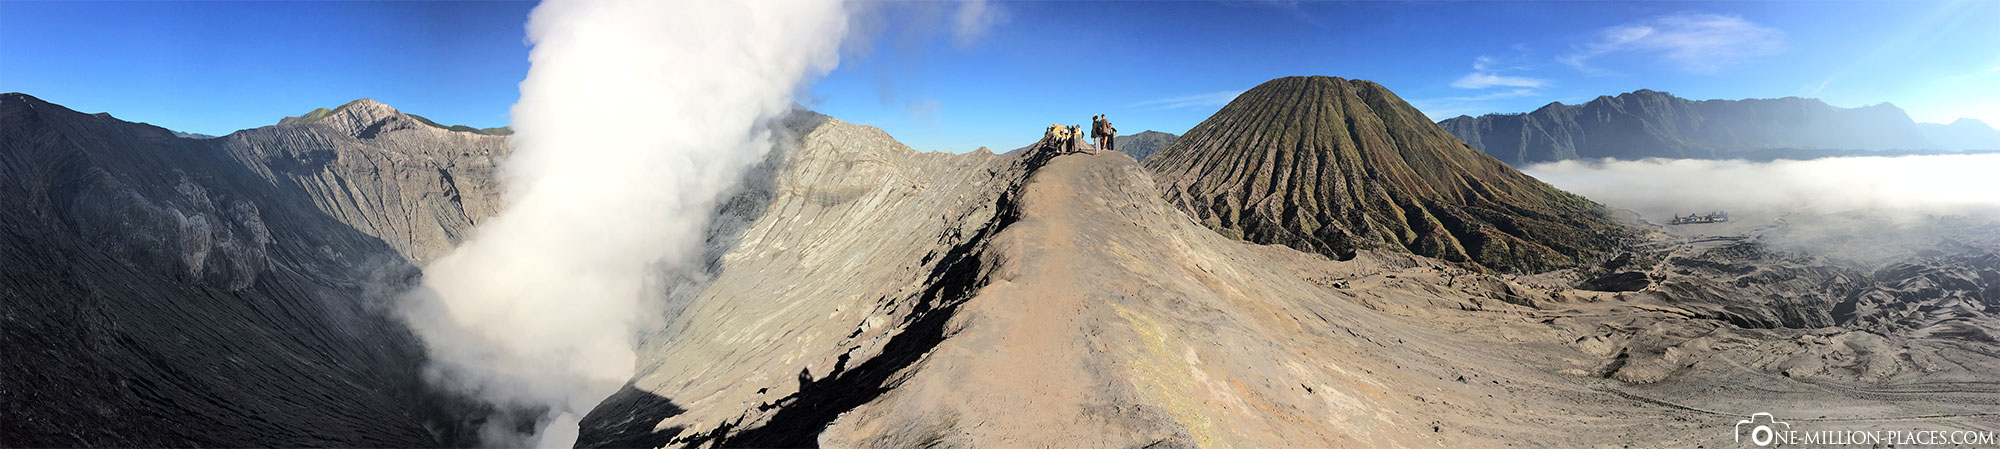 Panoramabild, Mount Bromo, Krater, Insel Java, Indonesien, Tour, Reisebericht